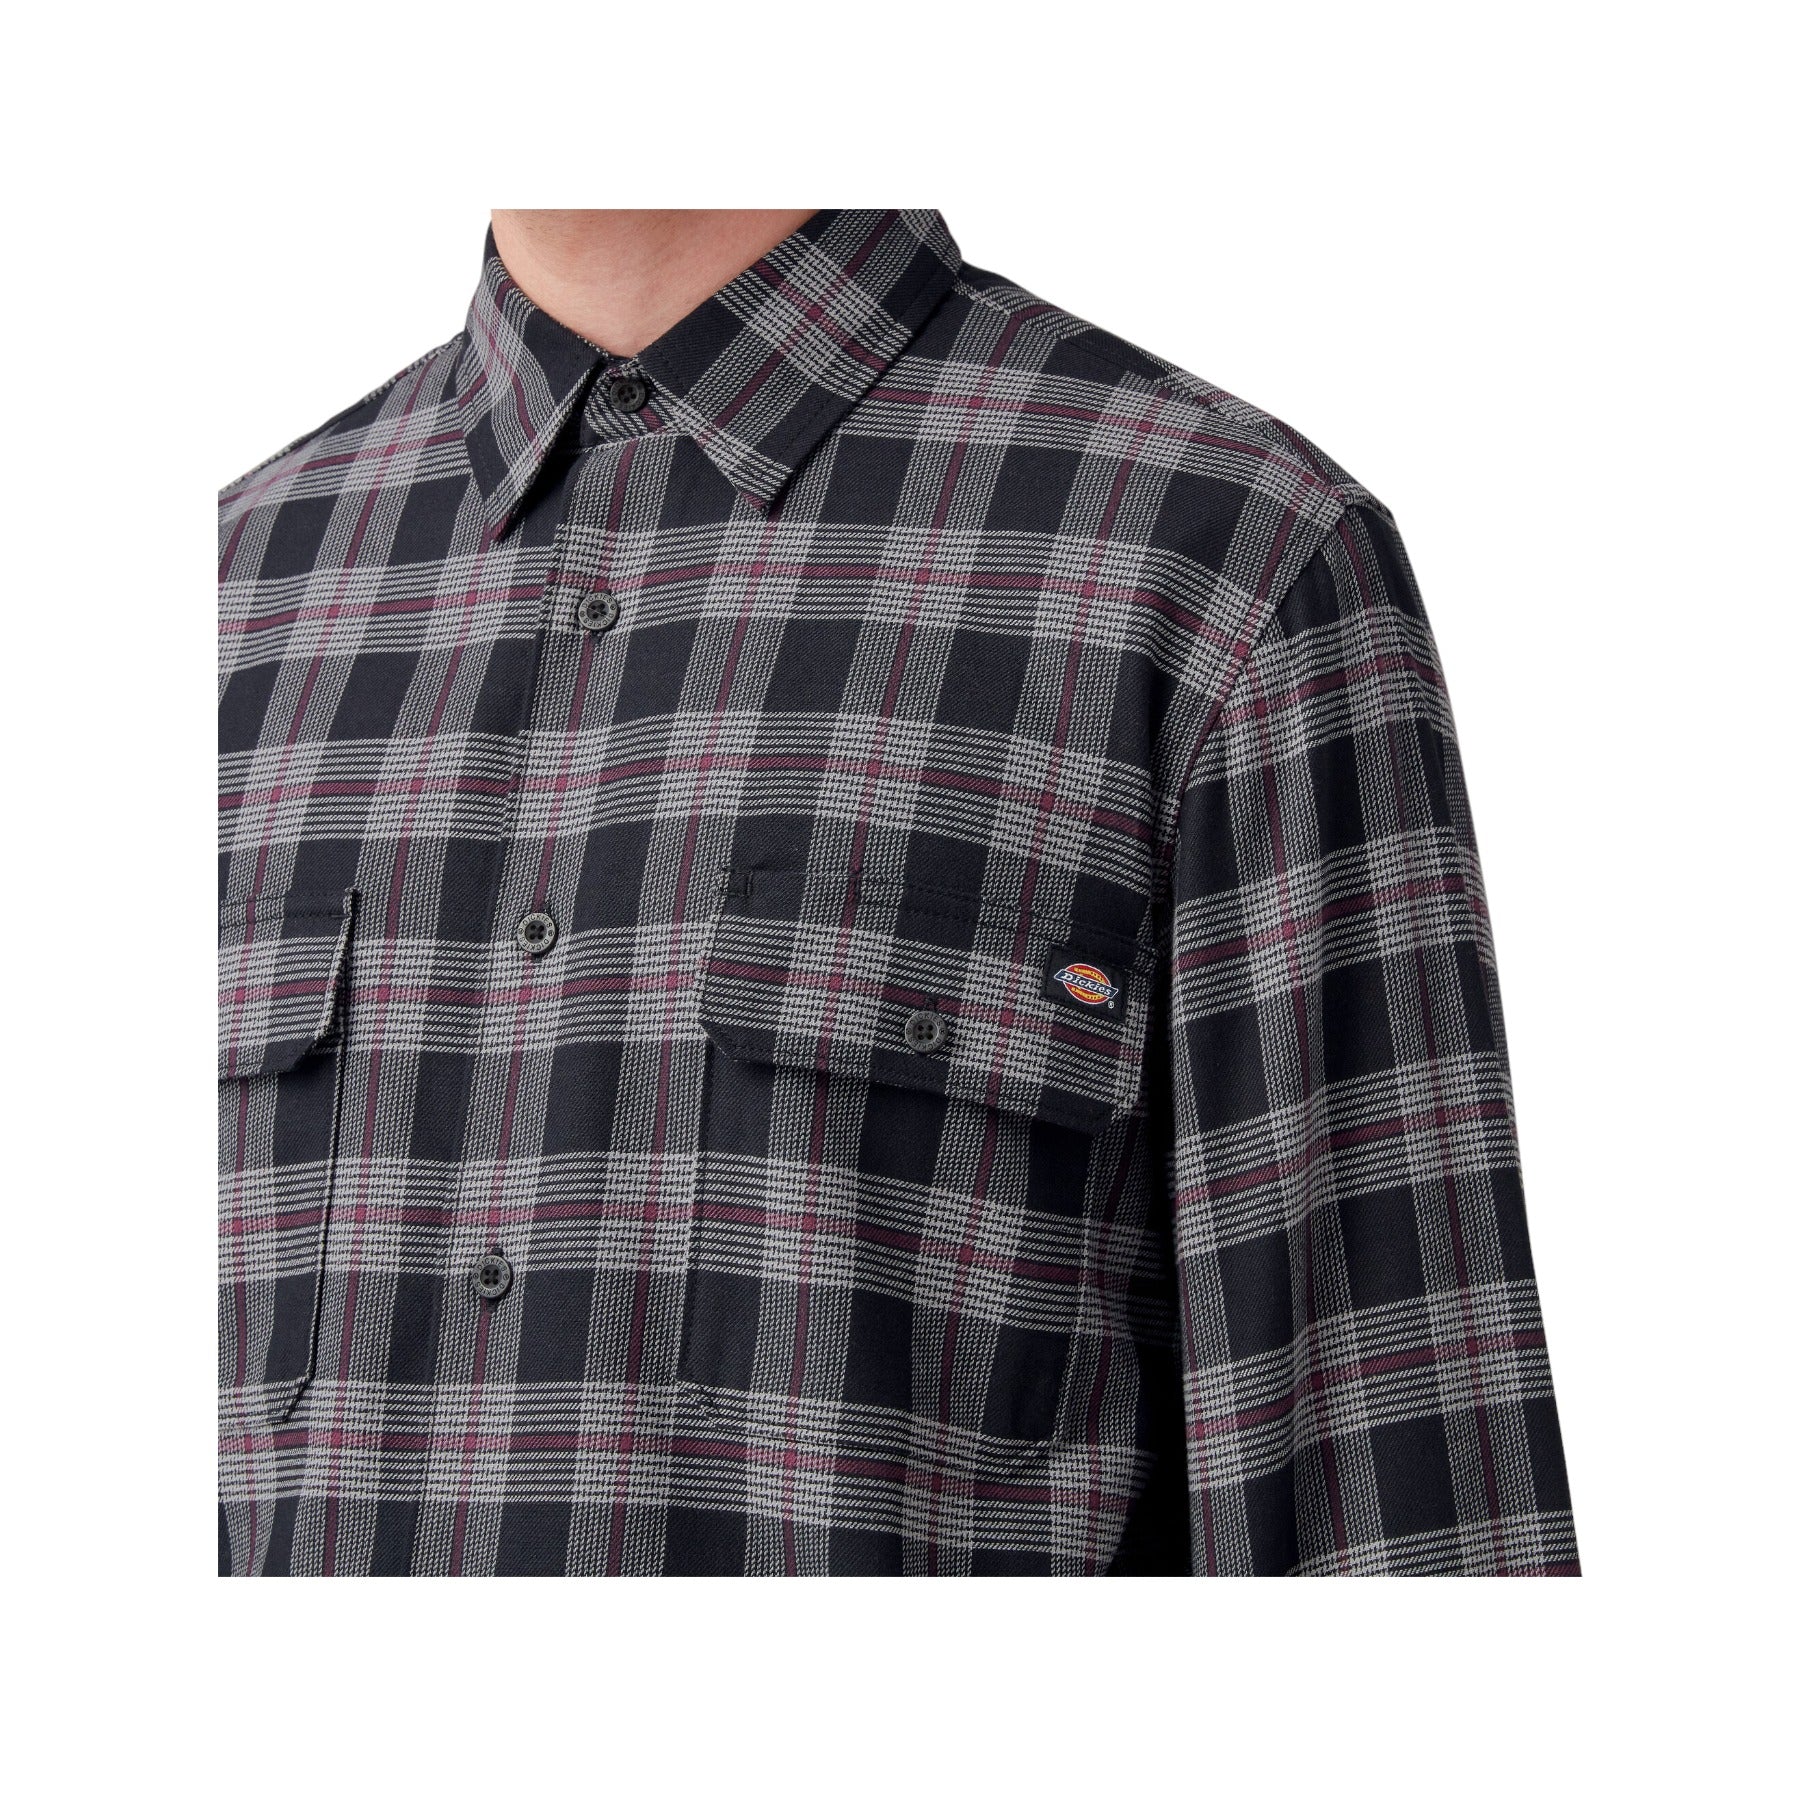 Dickies Regular Fit Flannel Shirt - Wine/Black